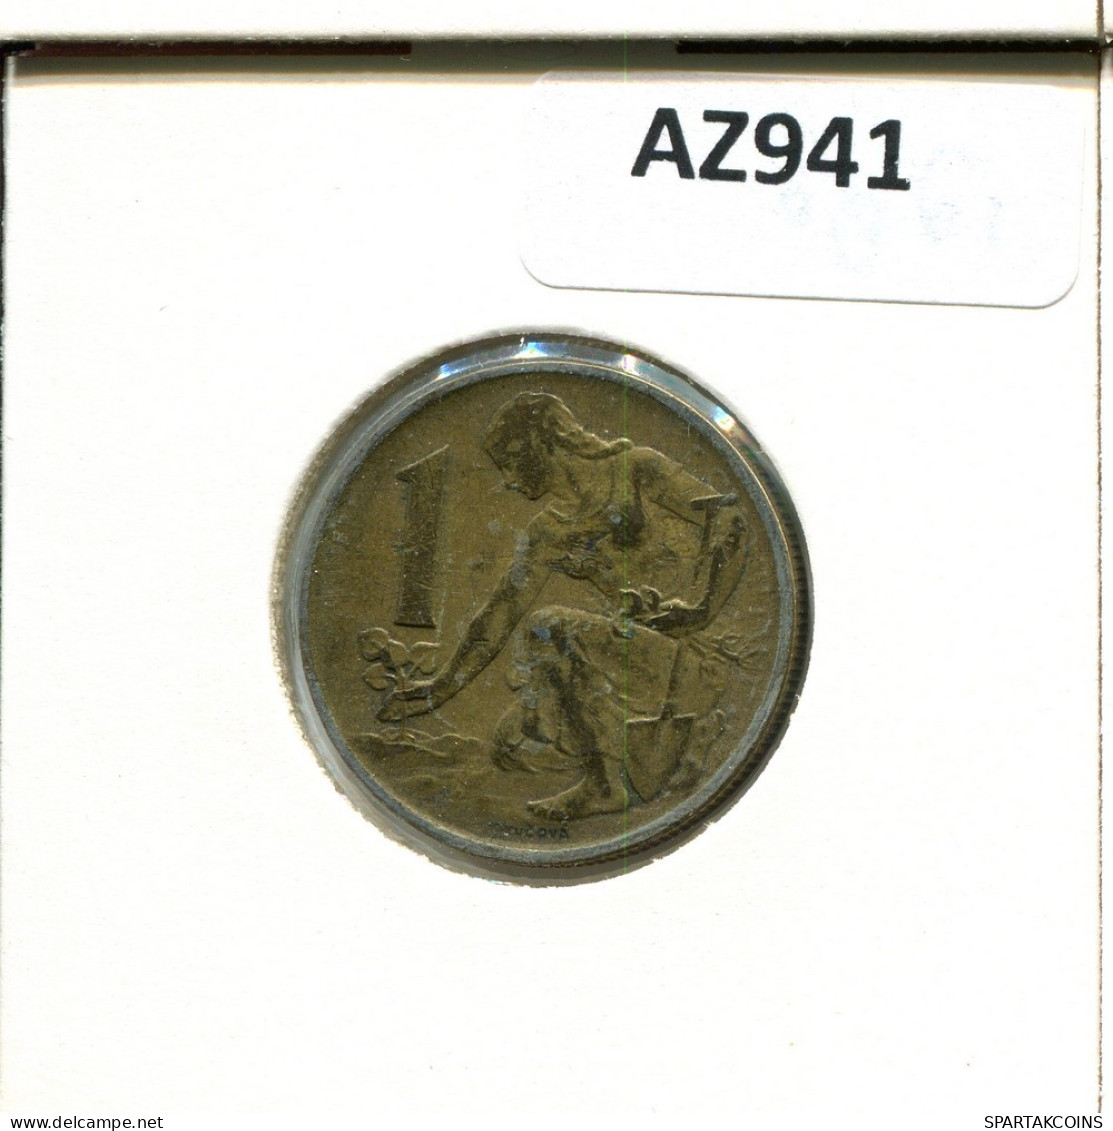 1 KORUNA 1980 CZECHOSLOVAKIA Coin #AZ941.U.A - Checoslovaquia